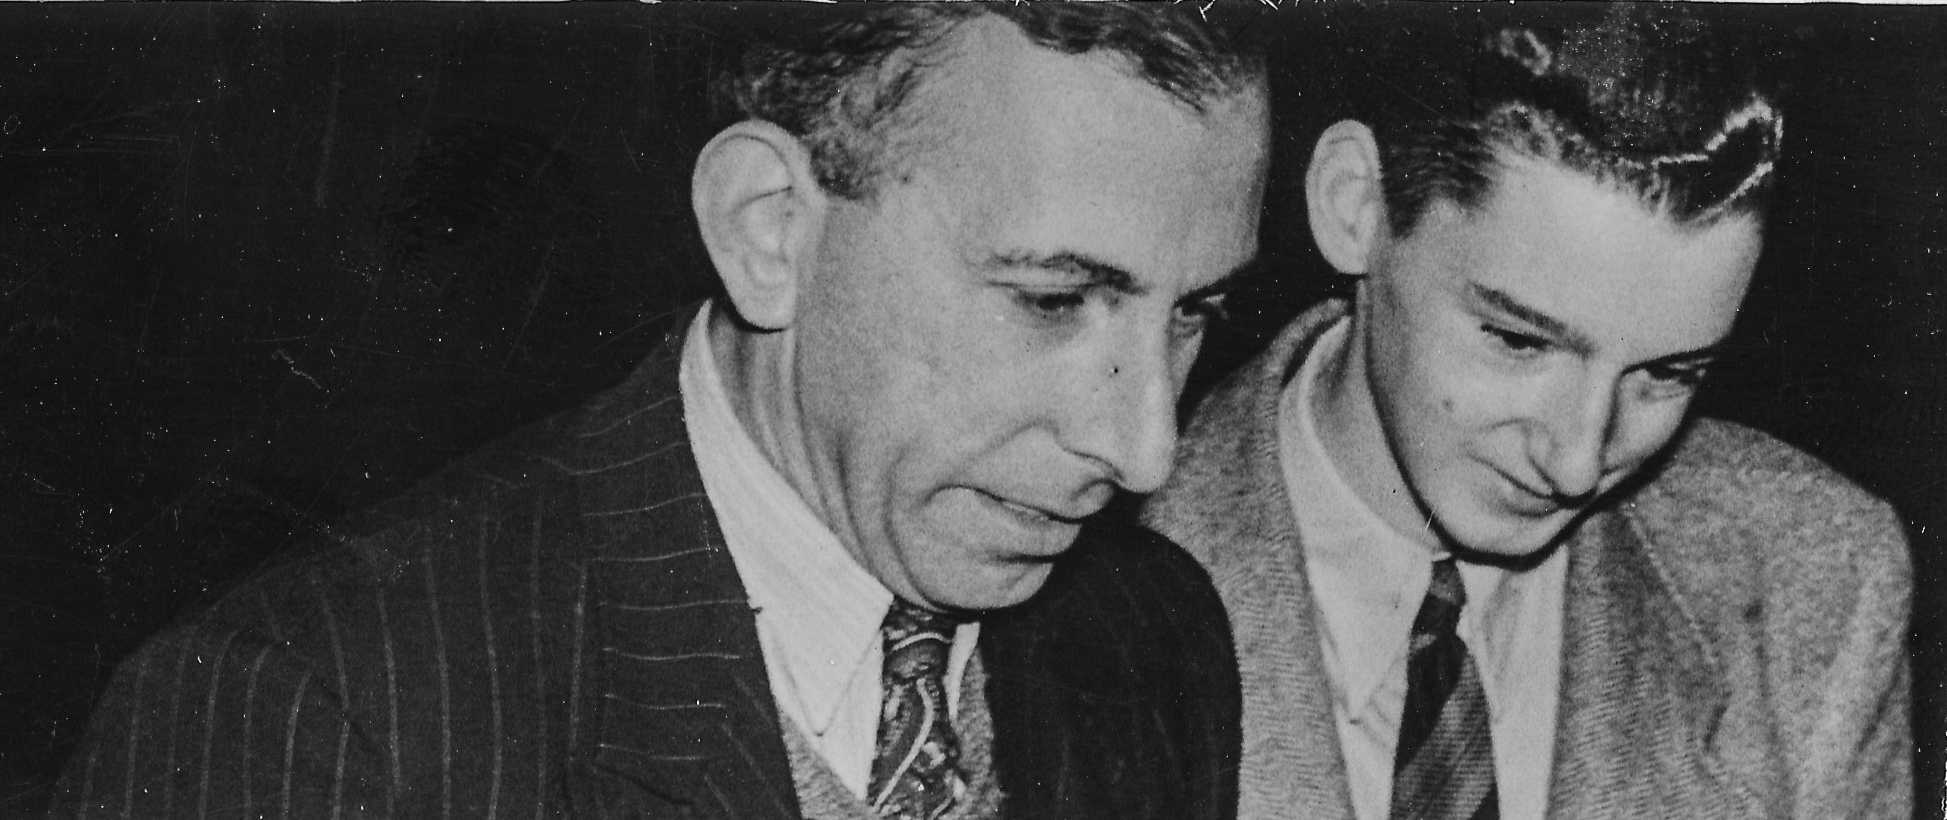 Harry Golombek and Gordon Crown in around 1946-47.